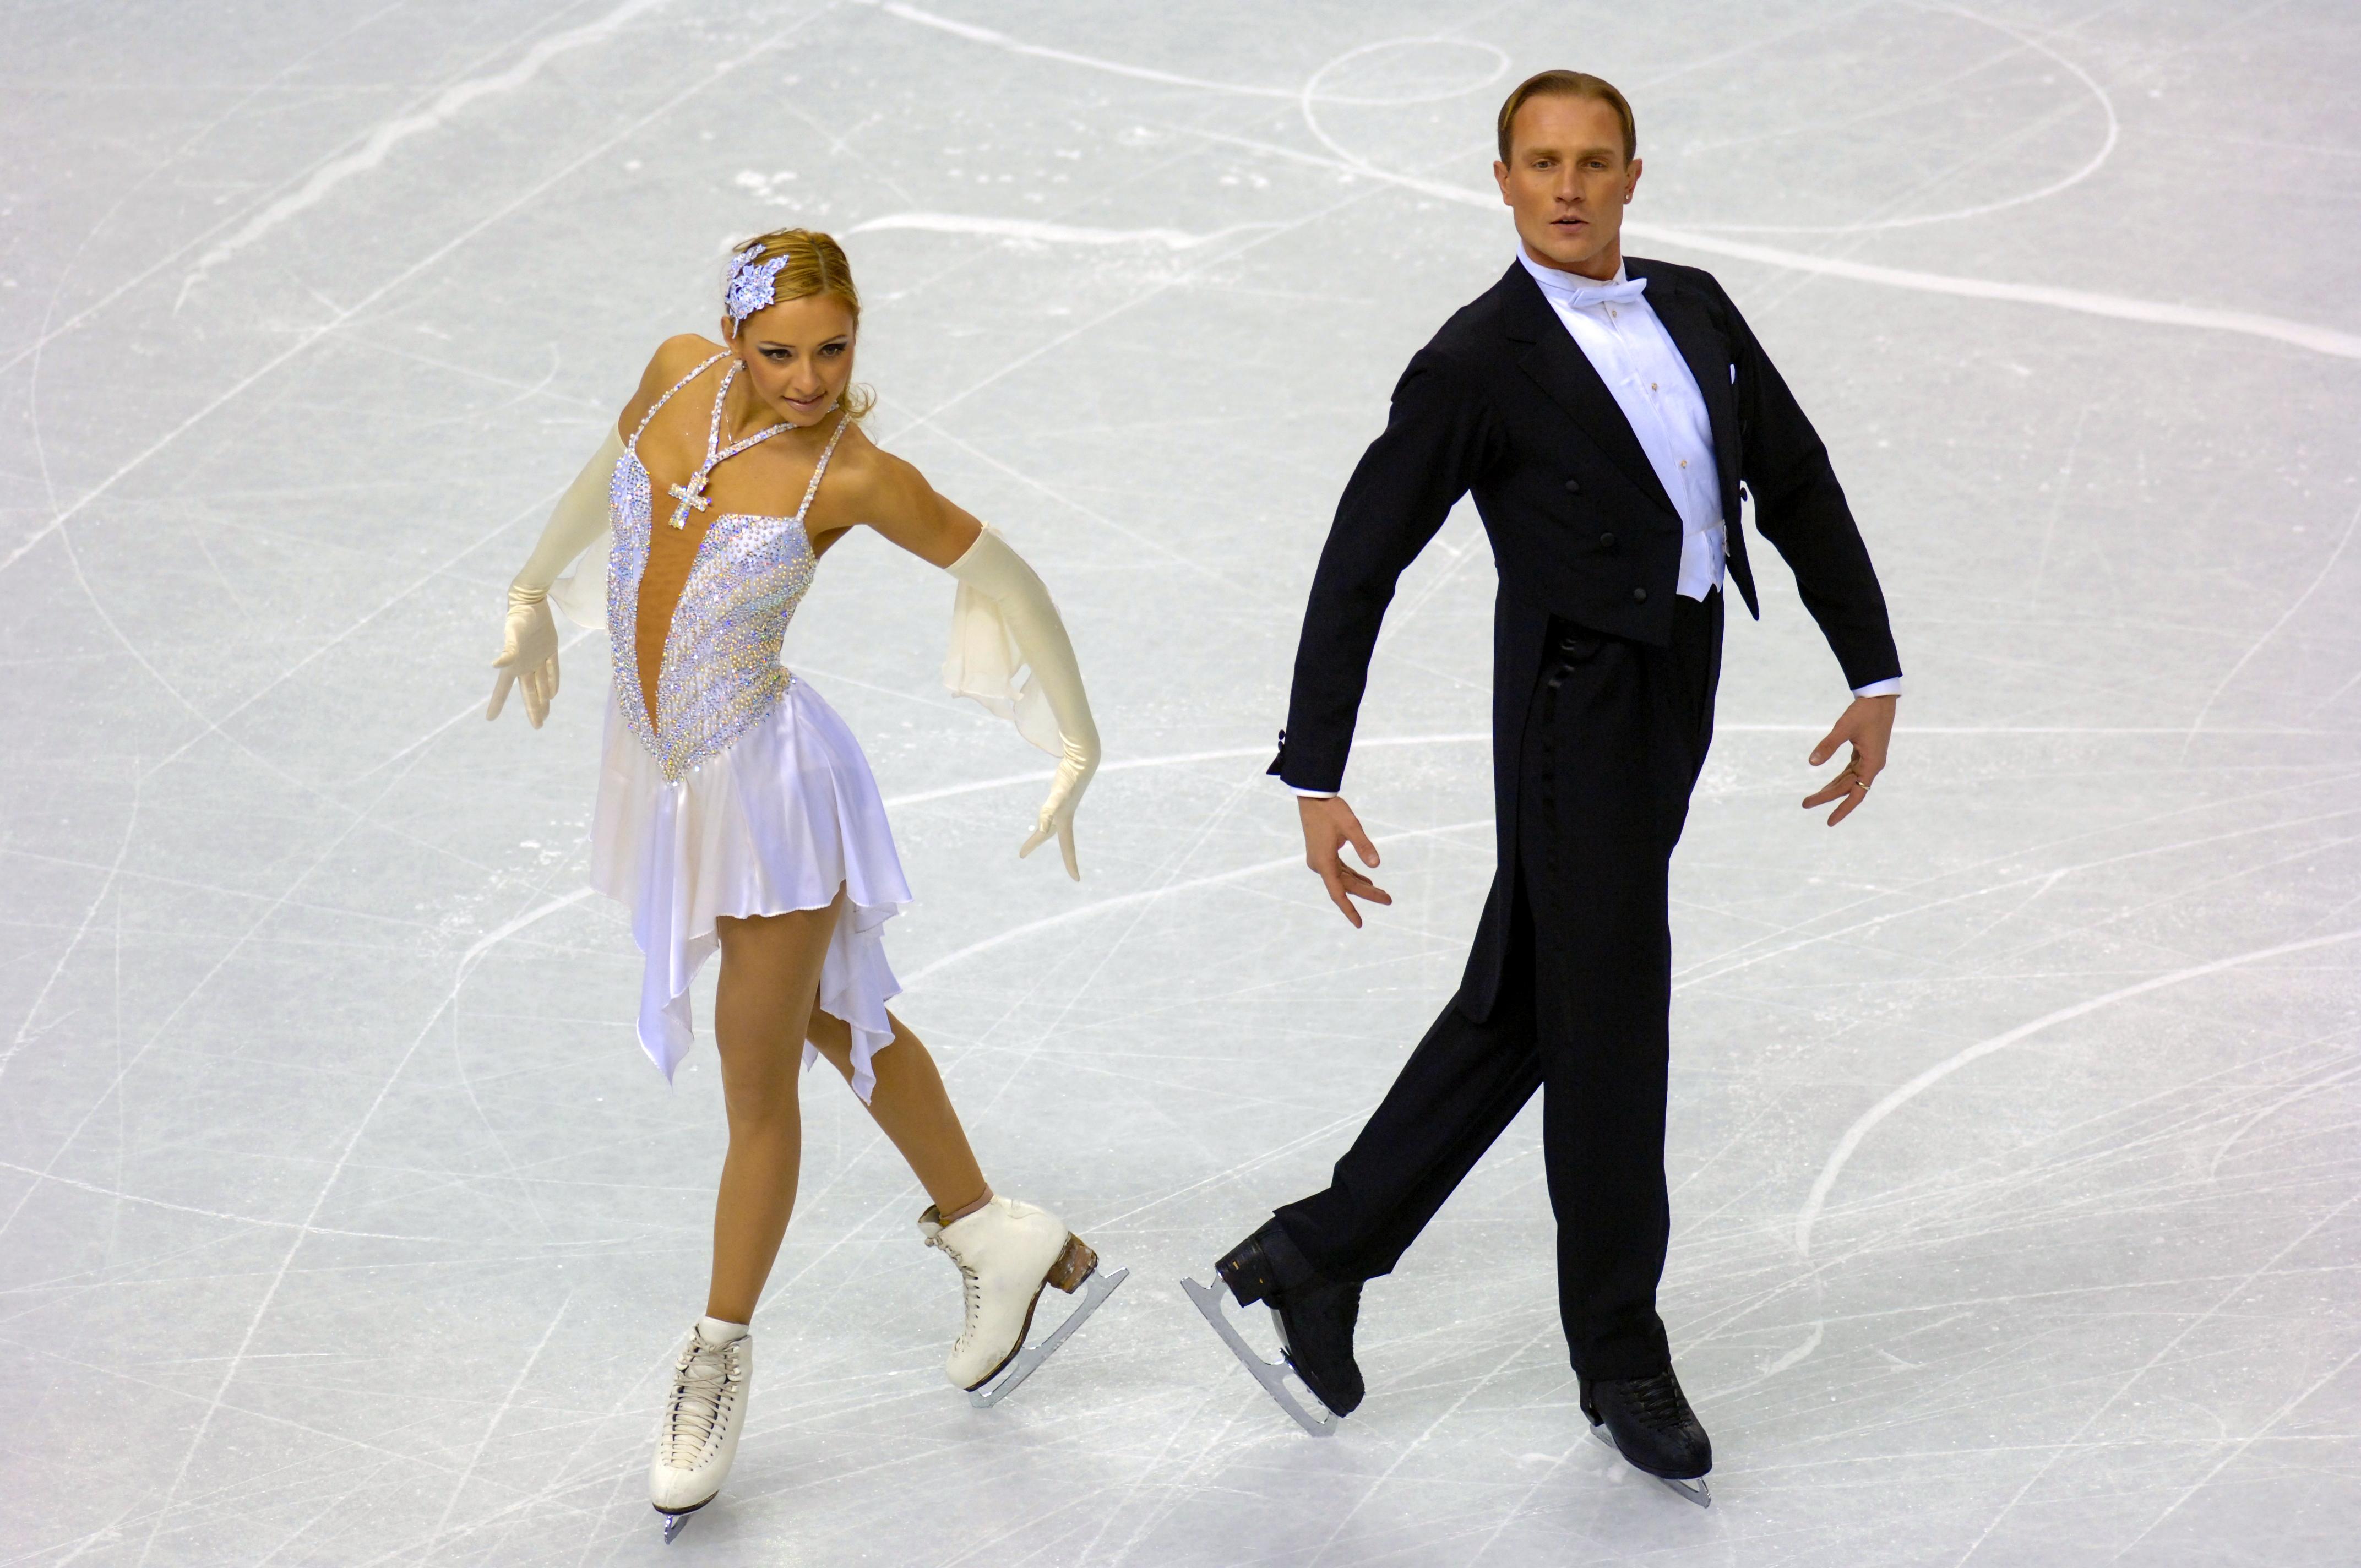 Roman Kostomarov şi Tatiana Navka, campioni olimpici în 2006, la Torino